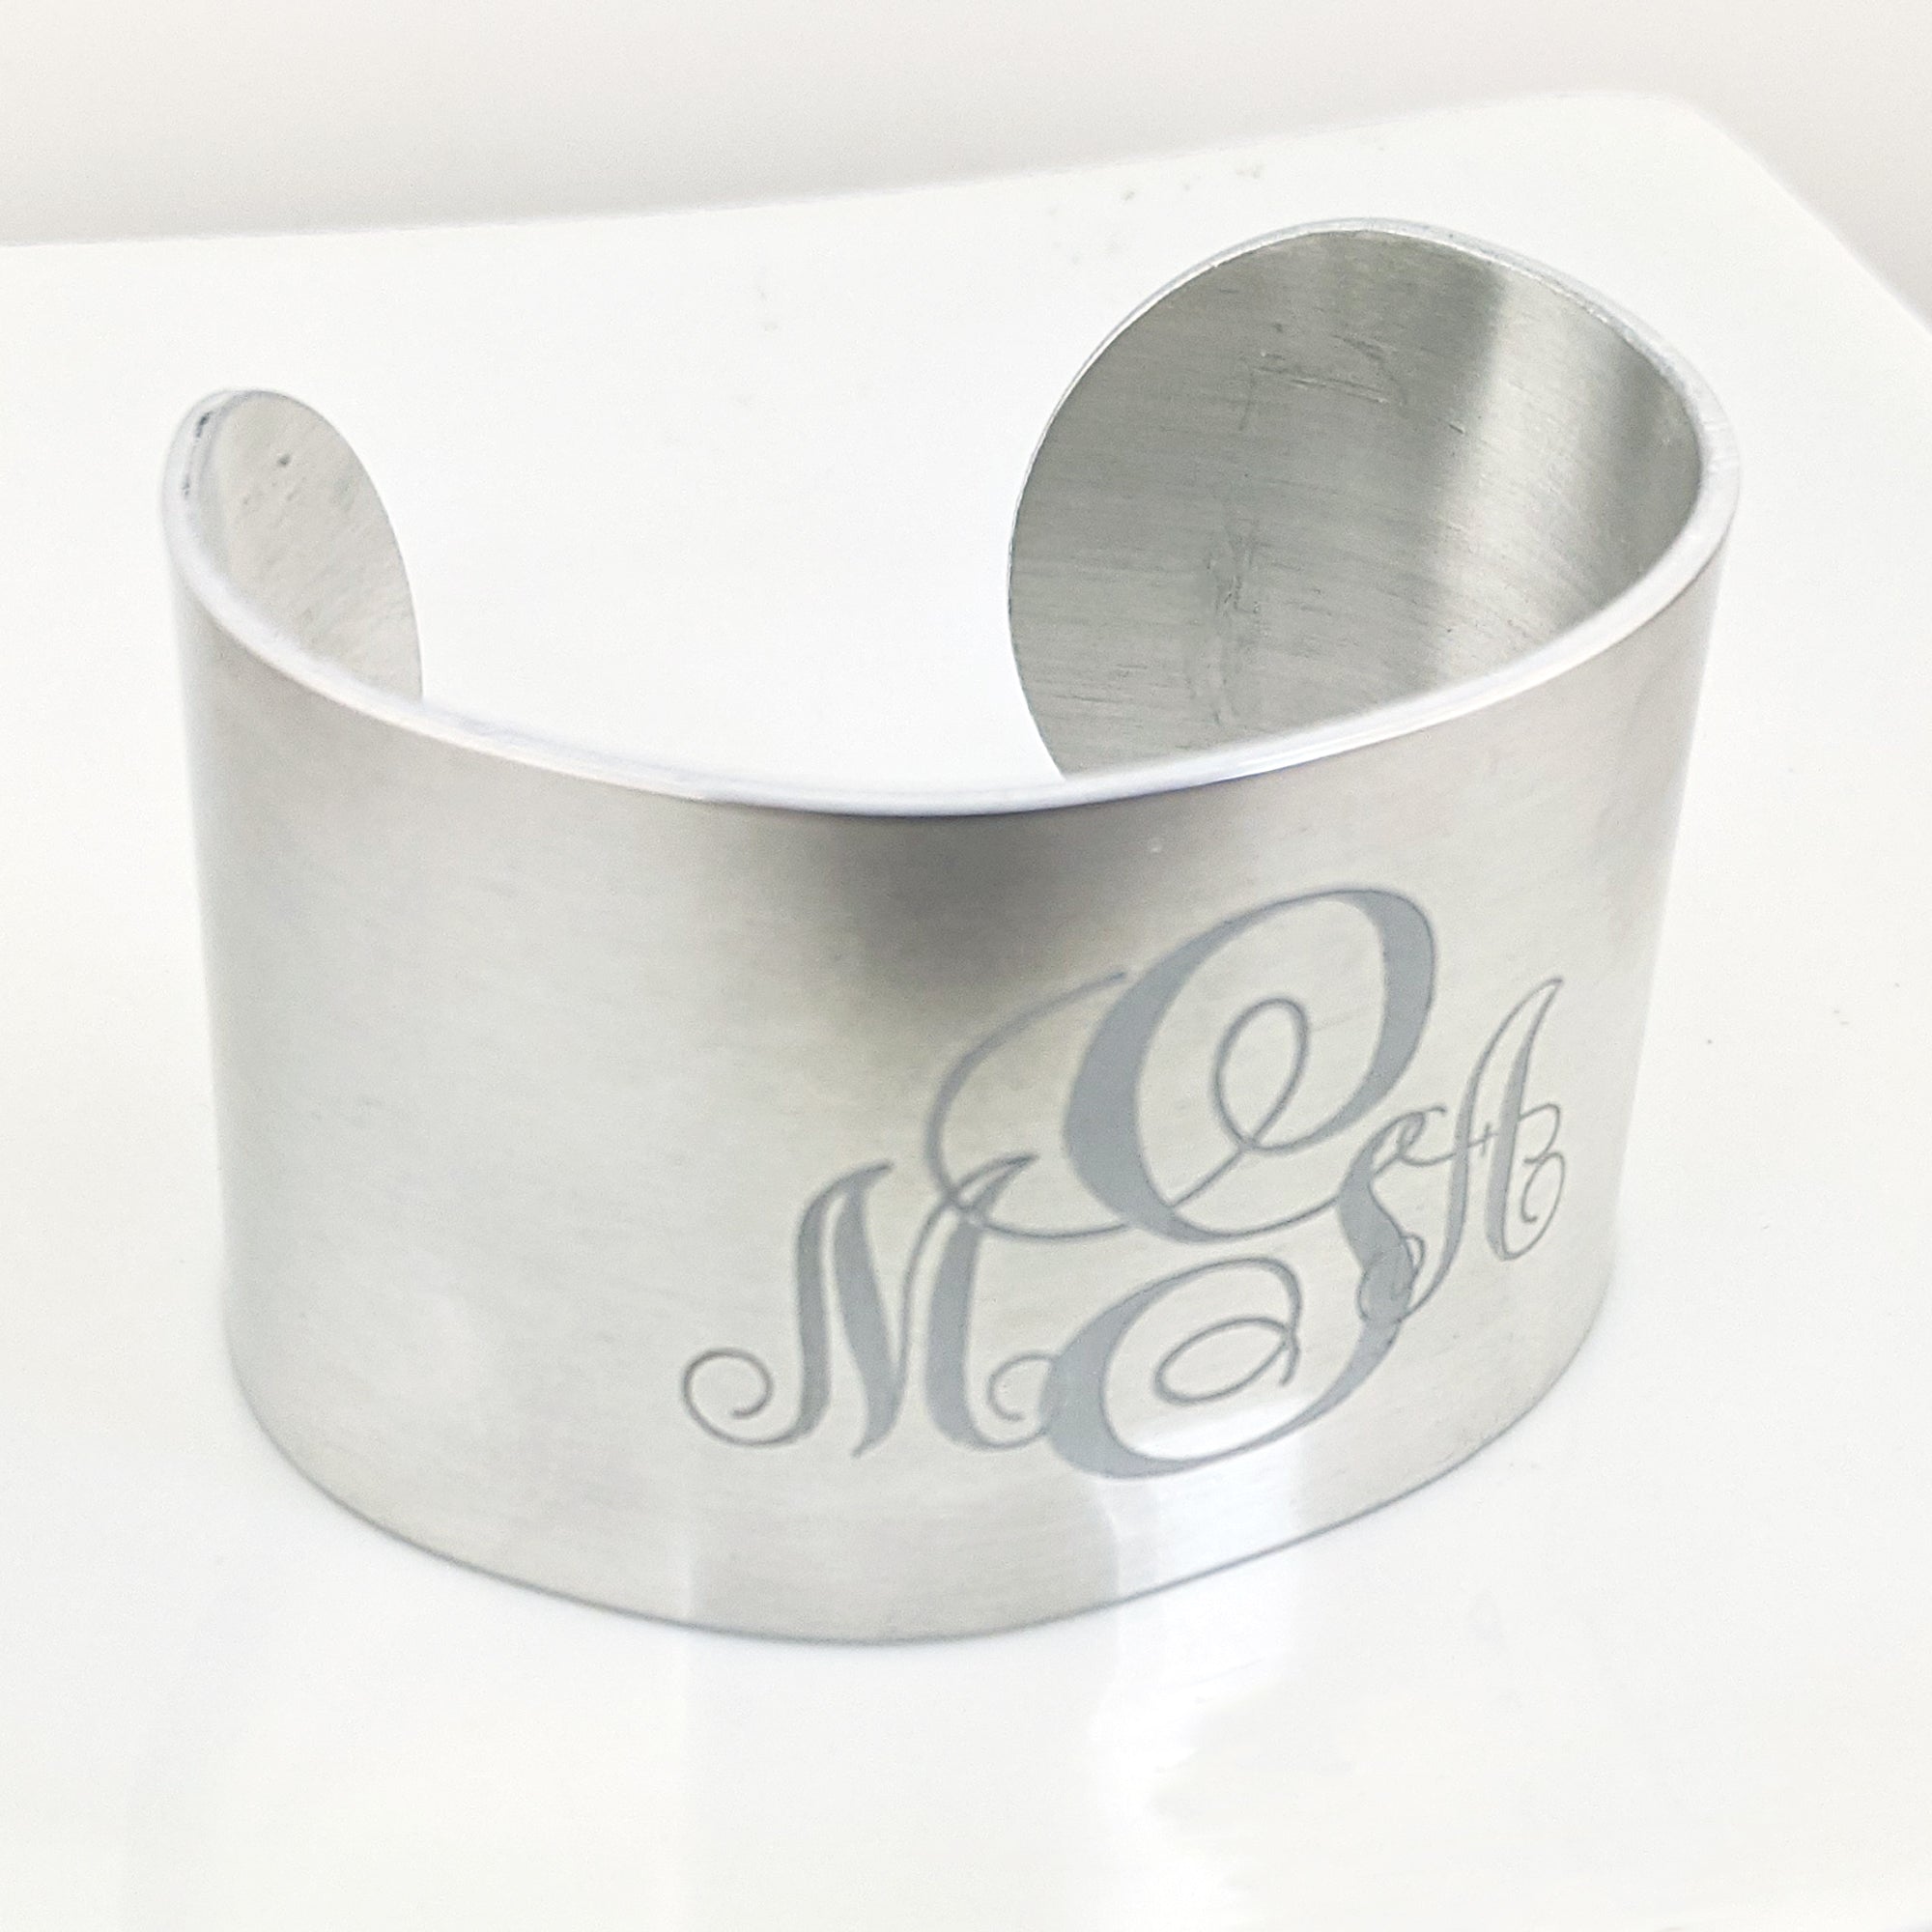 Personalized Monogram Cuff Bracelet Silver